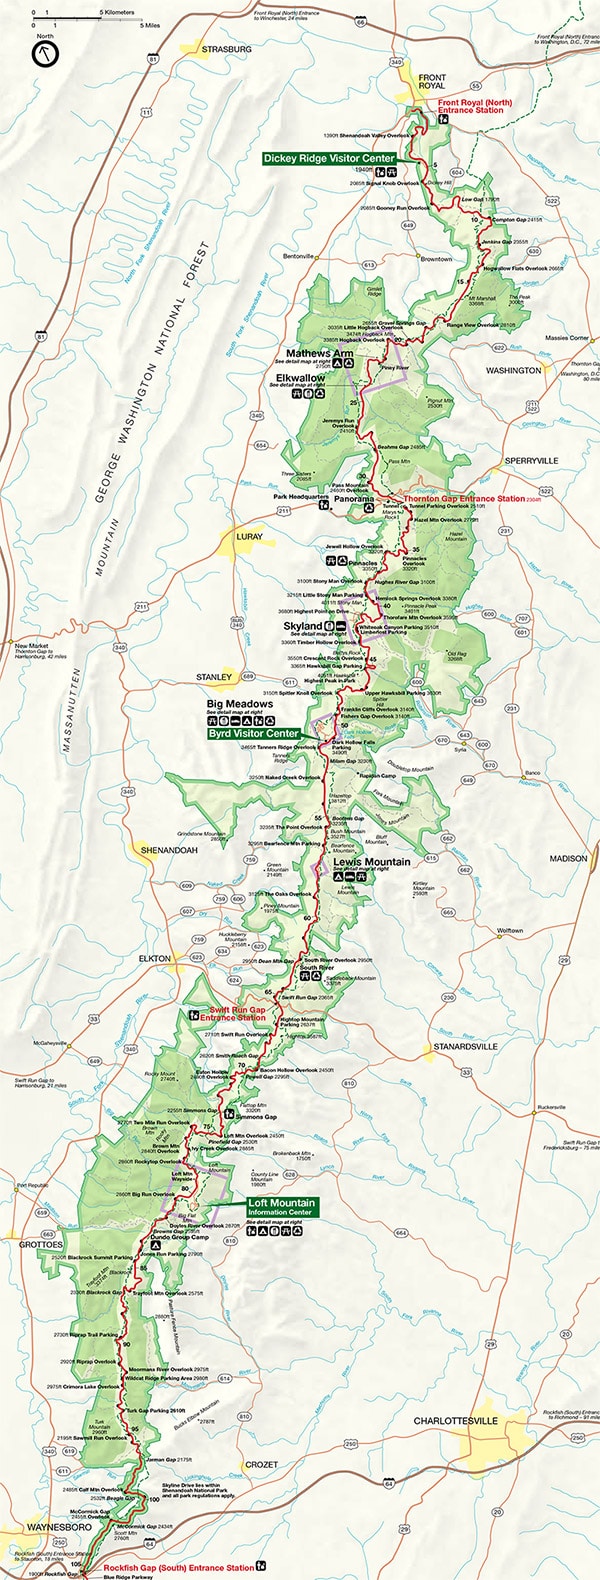 Shenandoah National Park Map